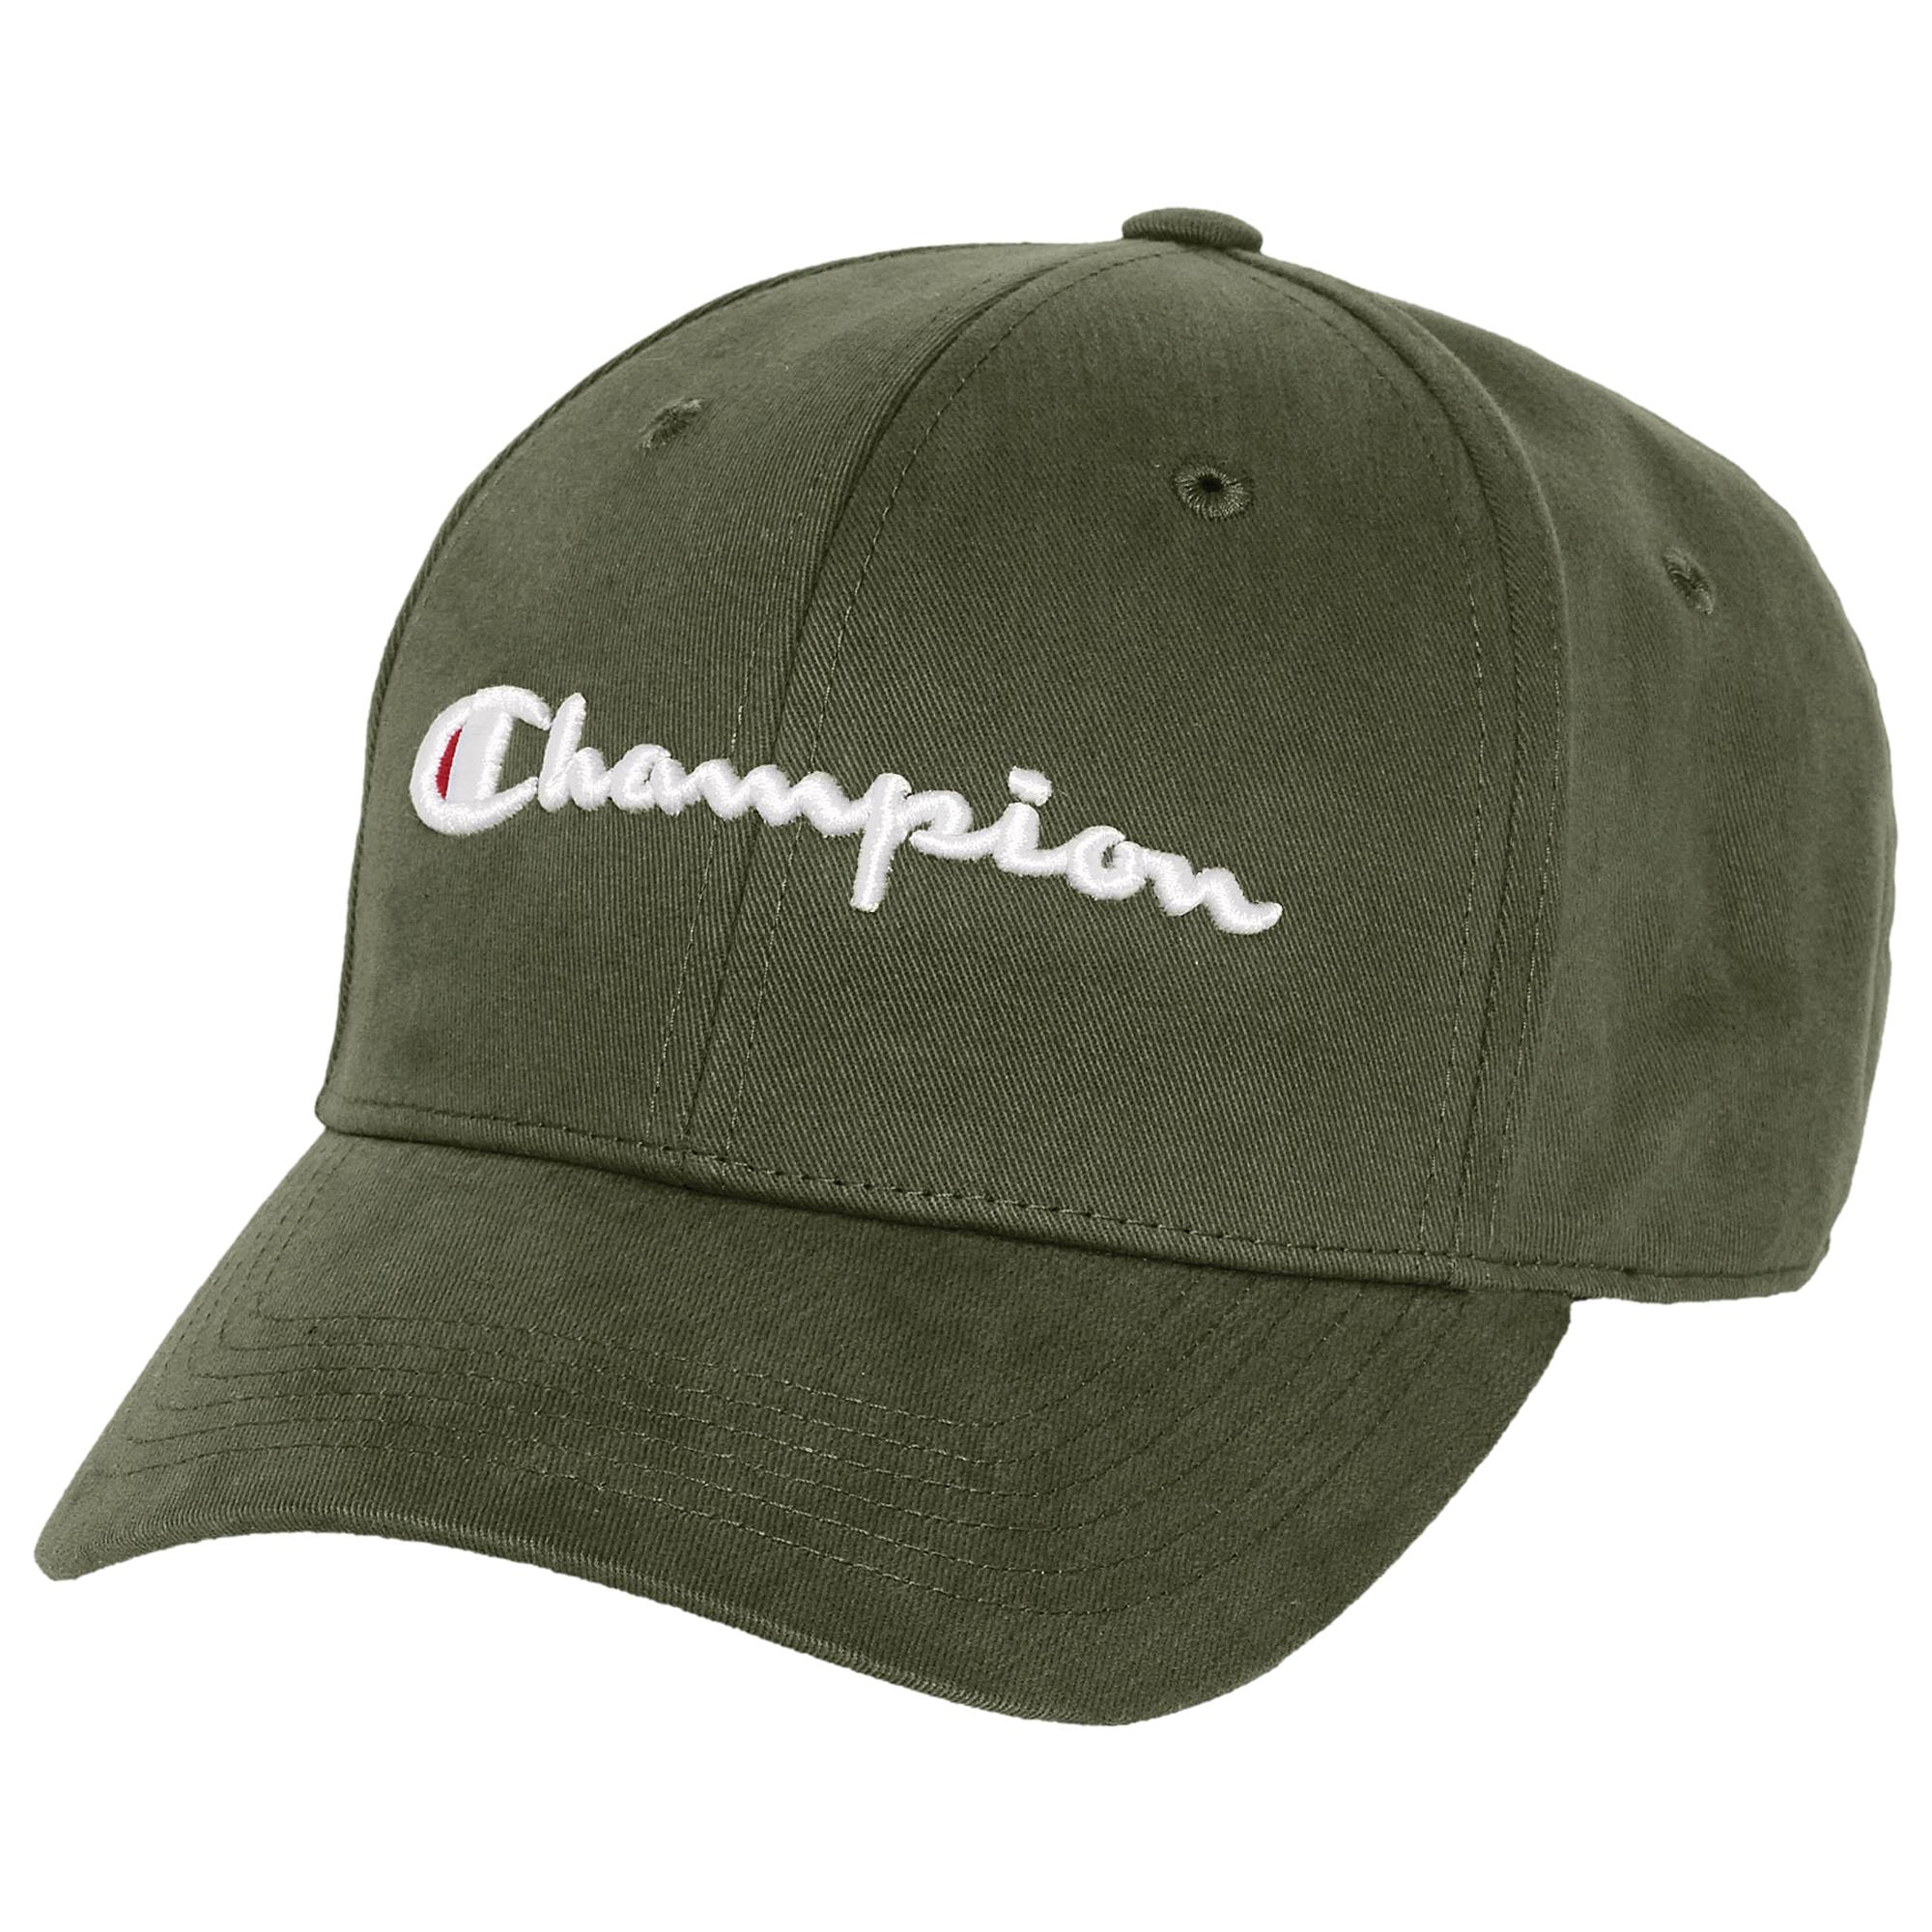 green champion hat